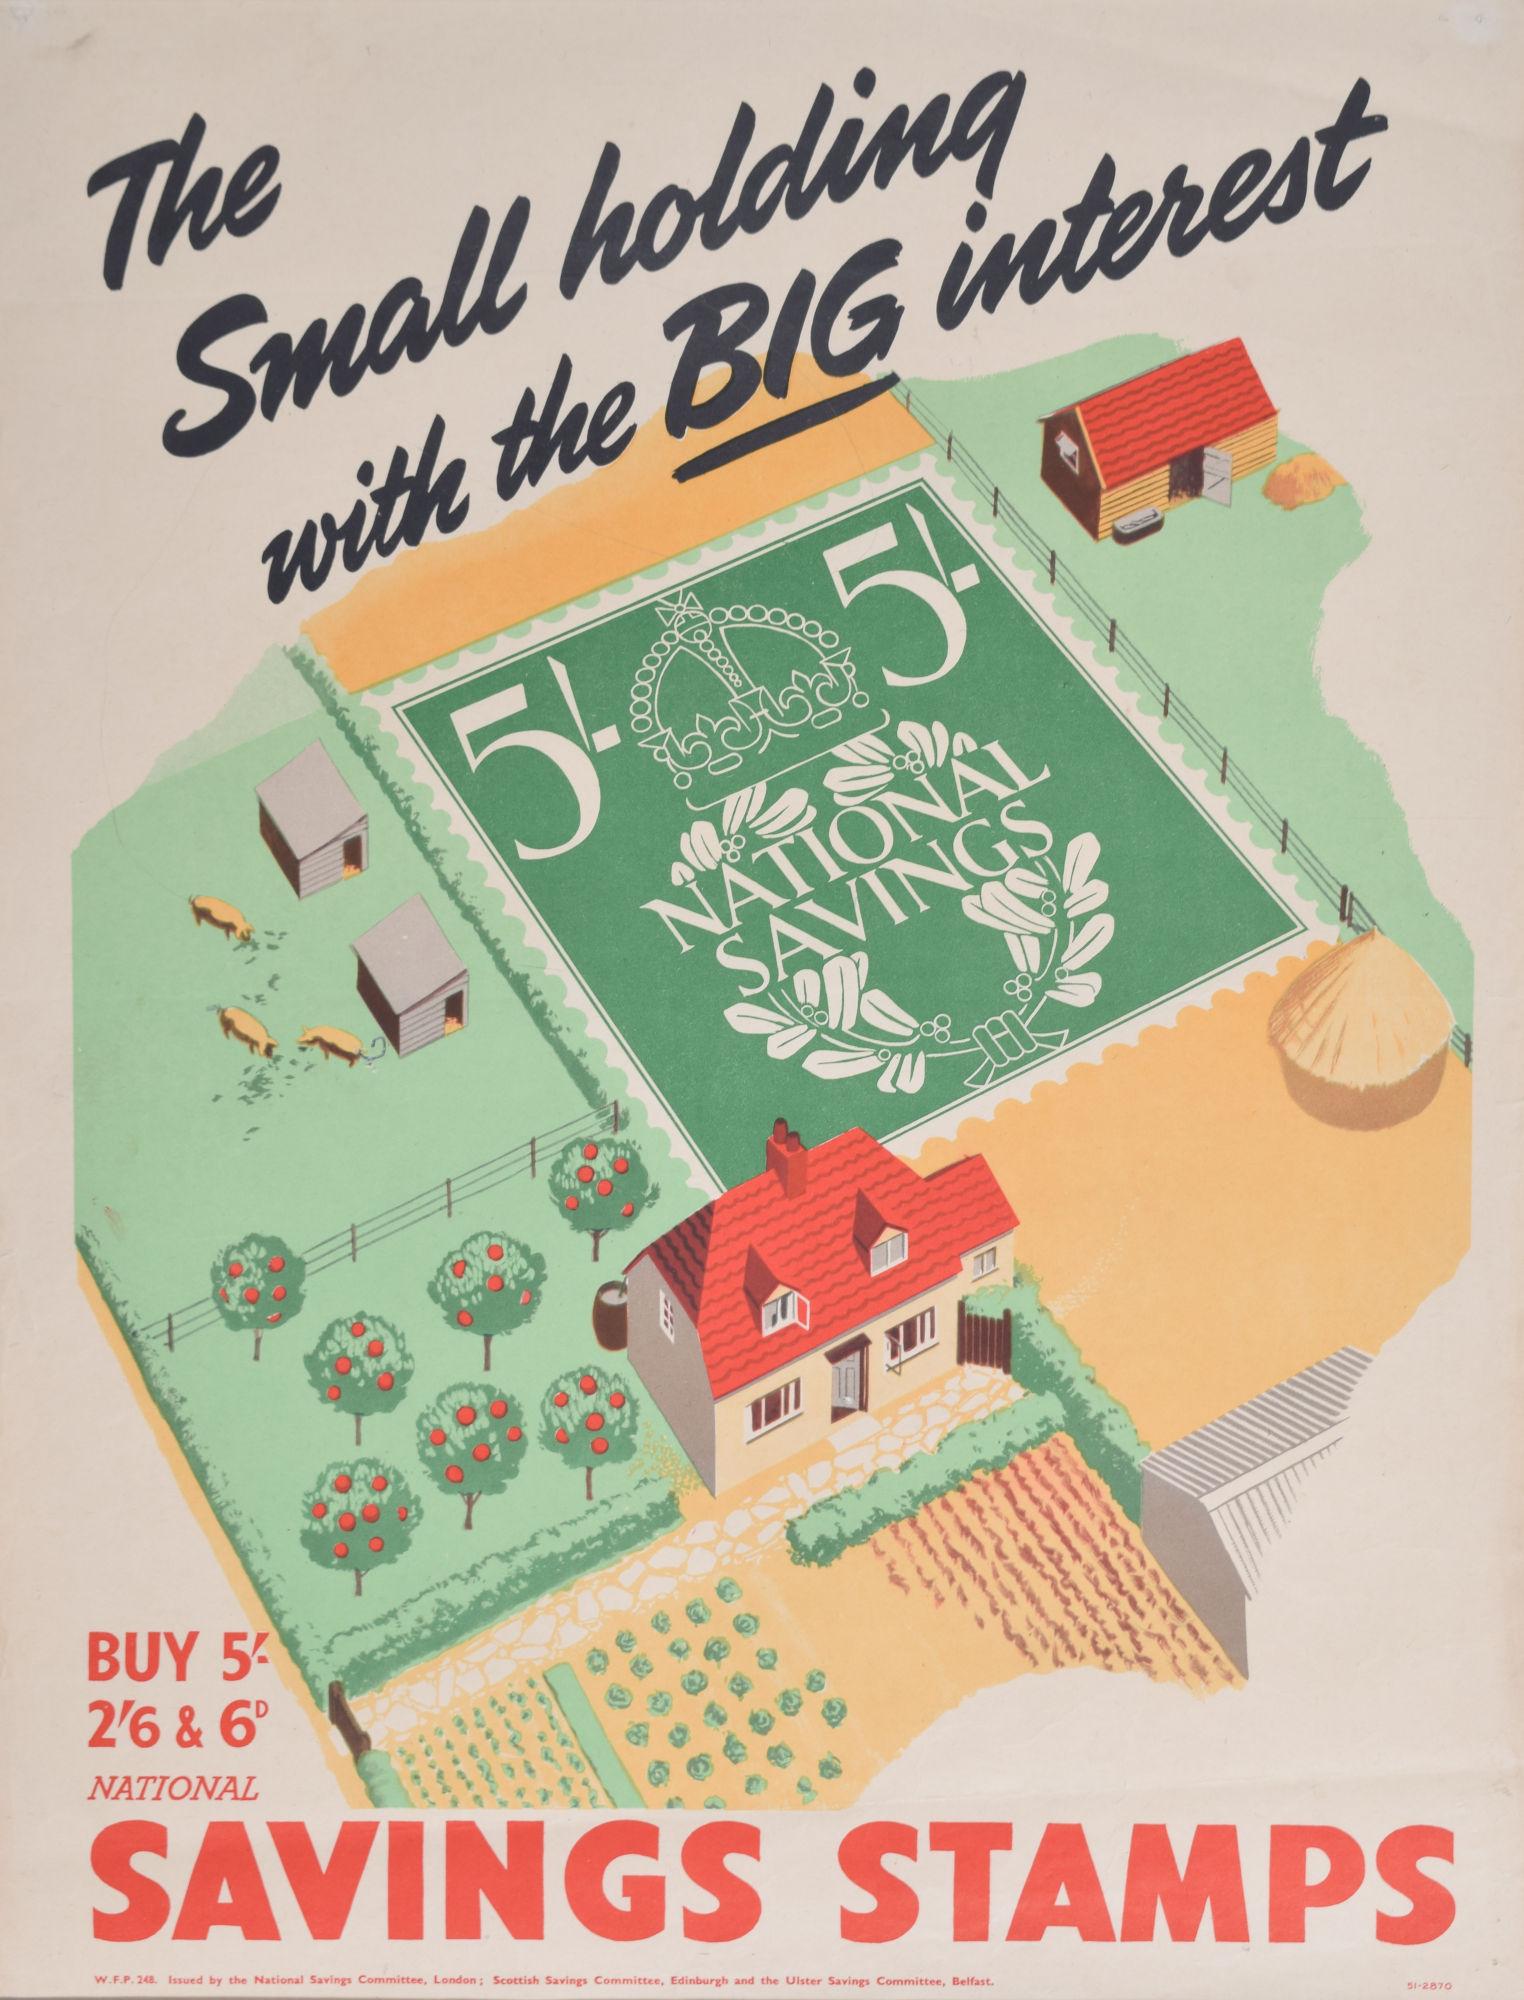 Savings Stamps - the Small Holding mit dem Big Interest Original-Vintage-Poster – Print von Unknown